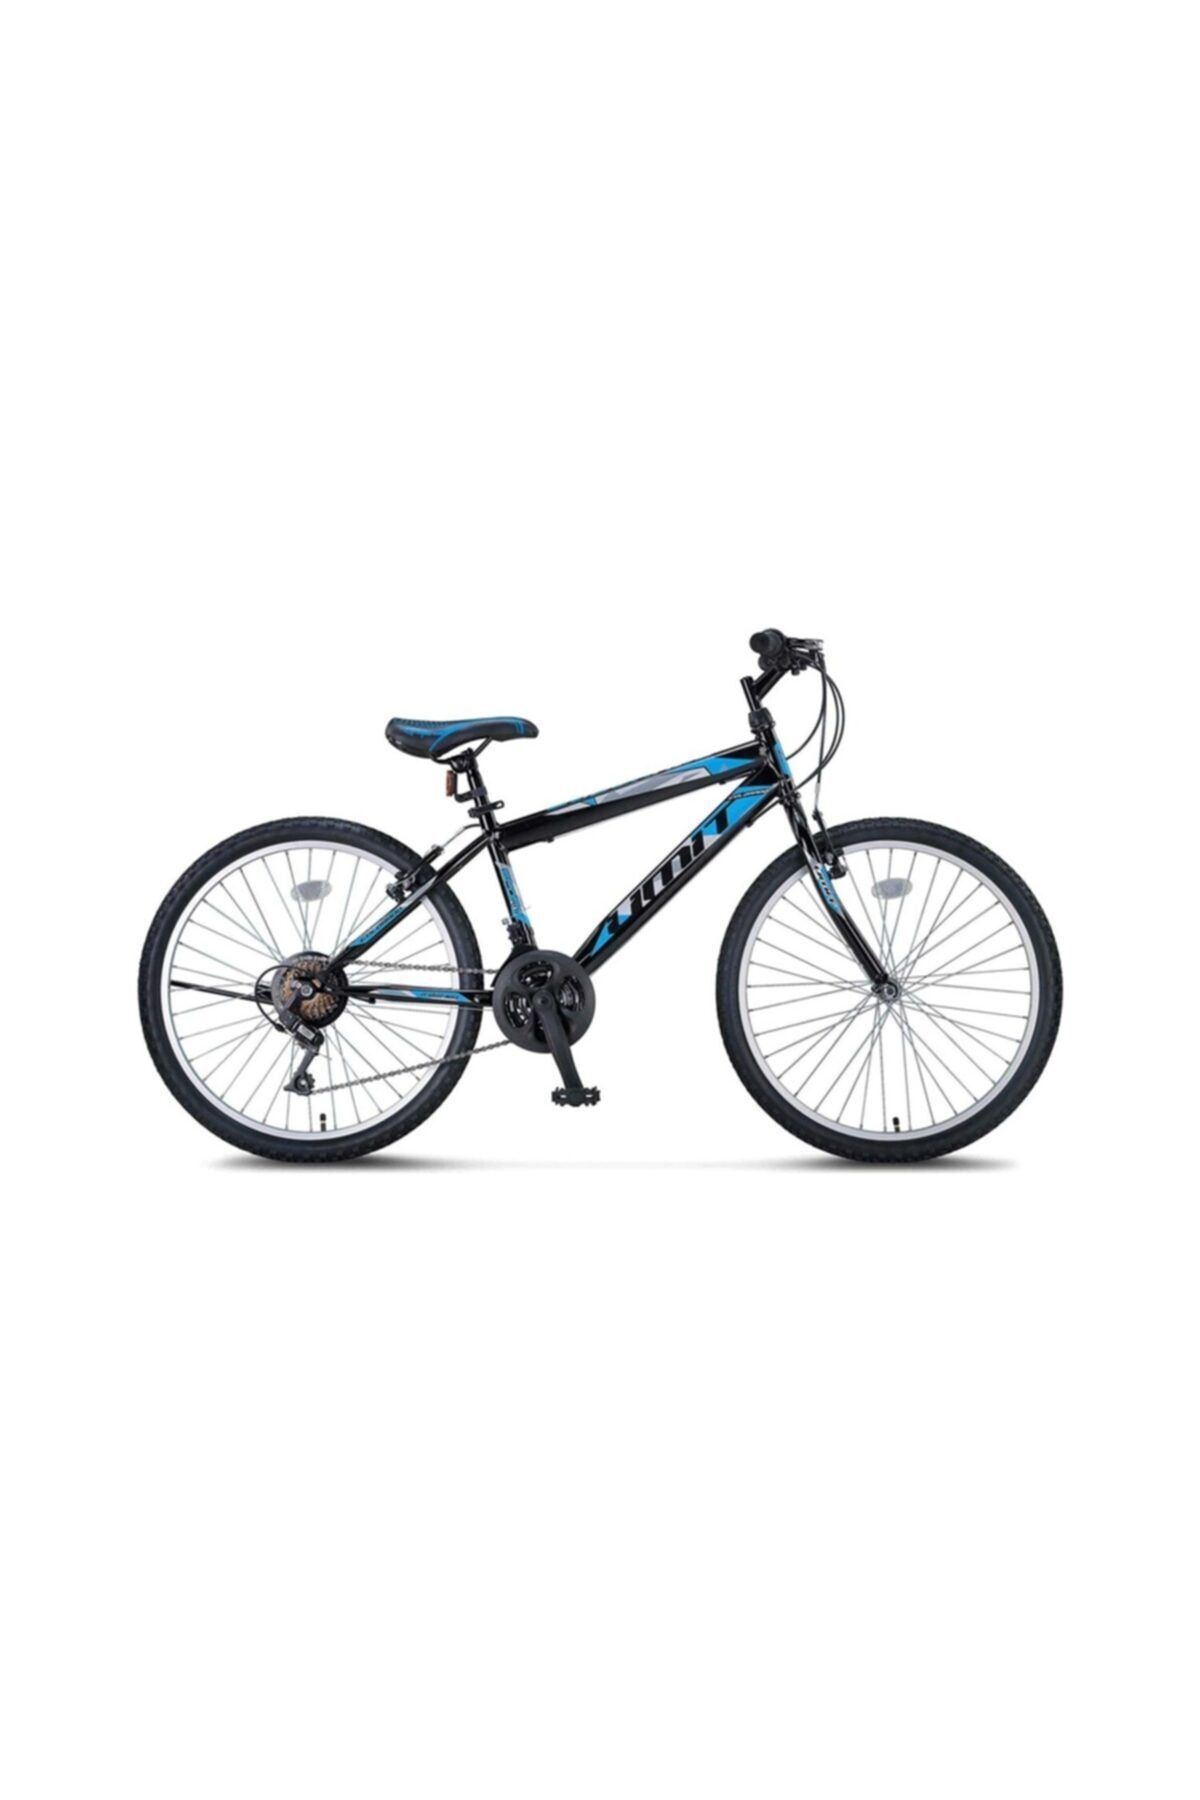 Ümit Bisiklet Colorado 26 Jant Siyah-mavi Erkek Dağ Bisikleti 2601